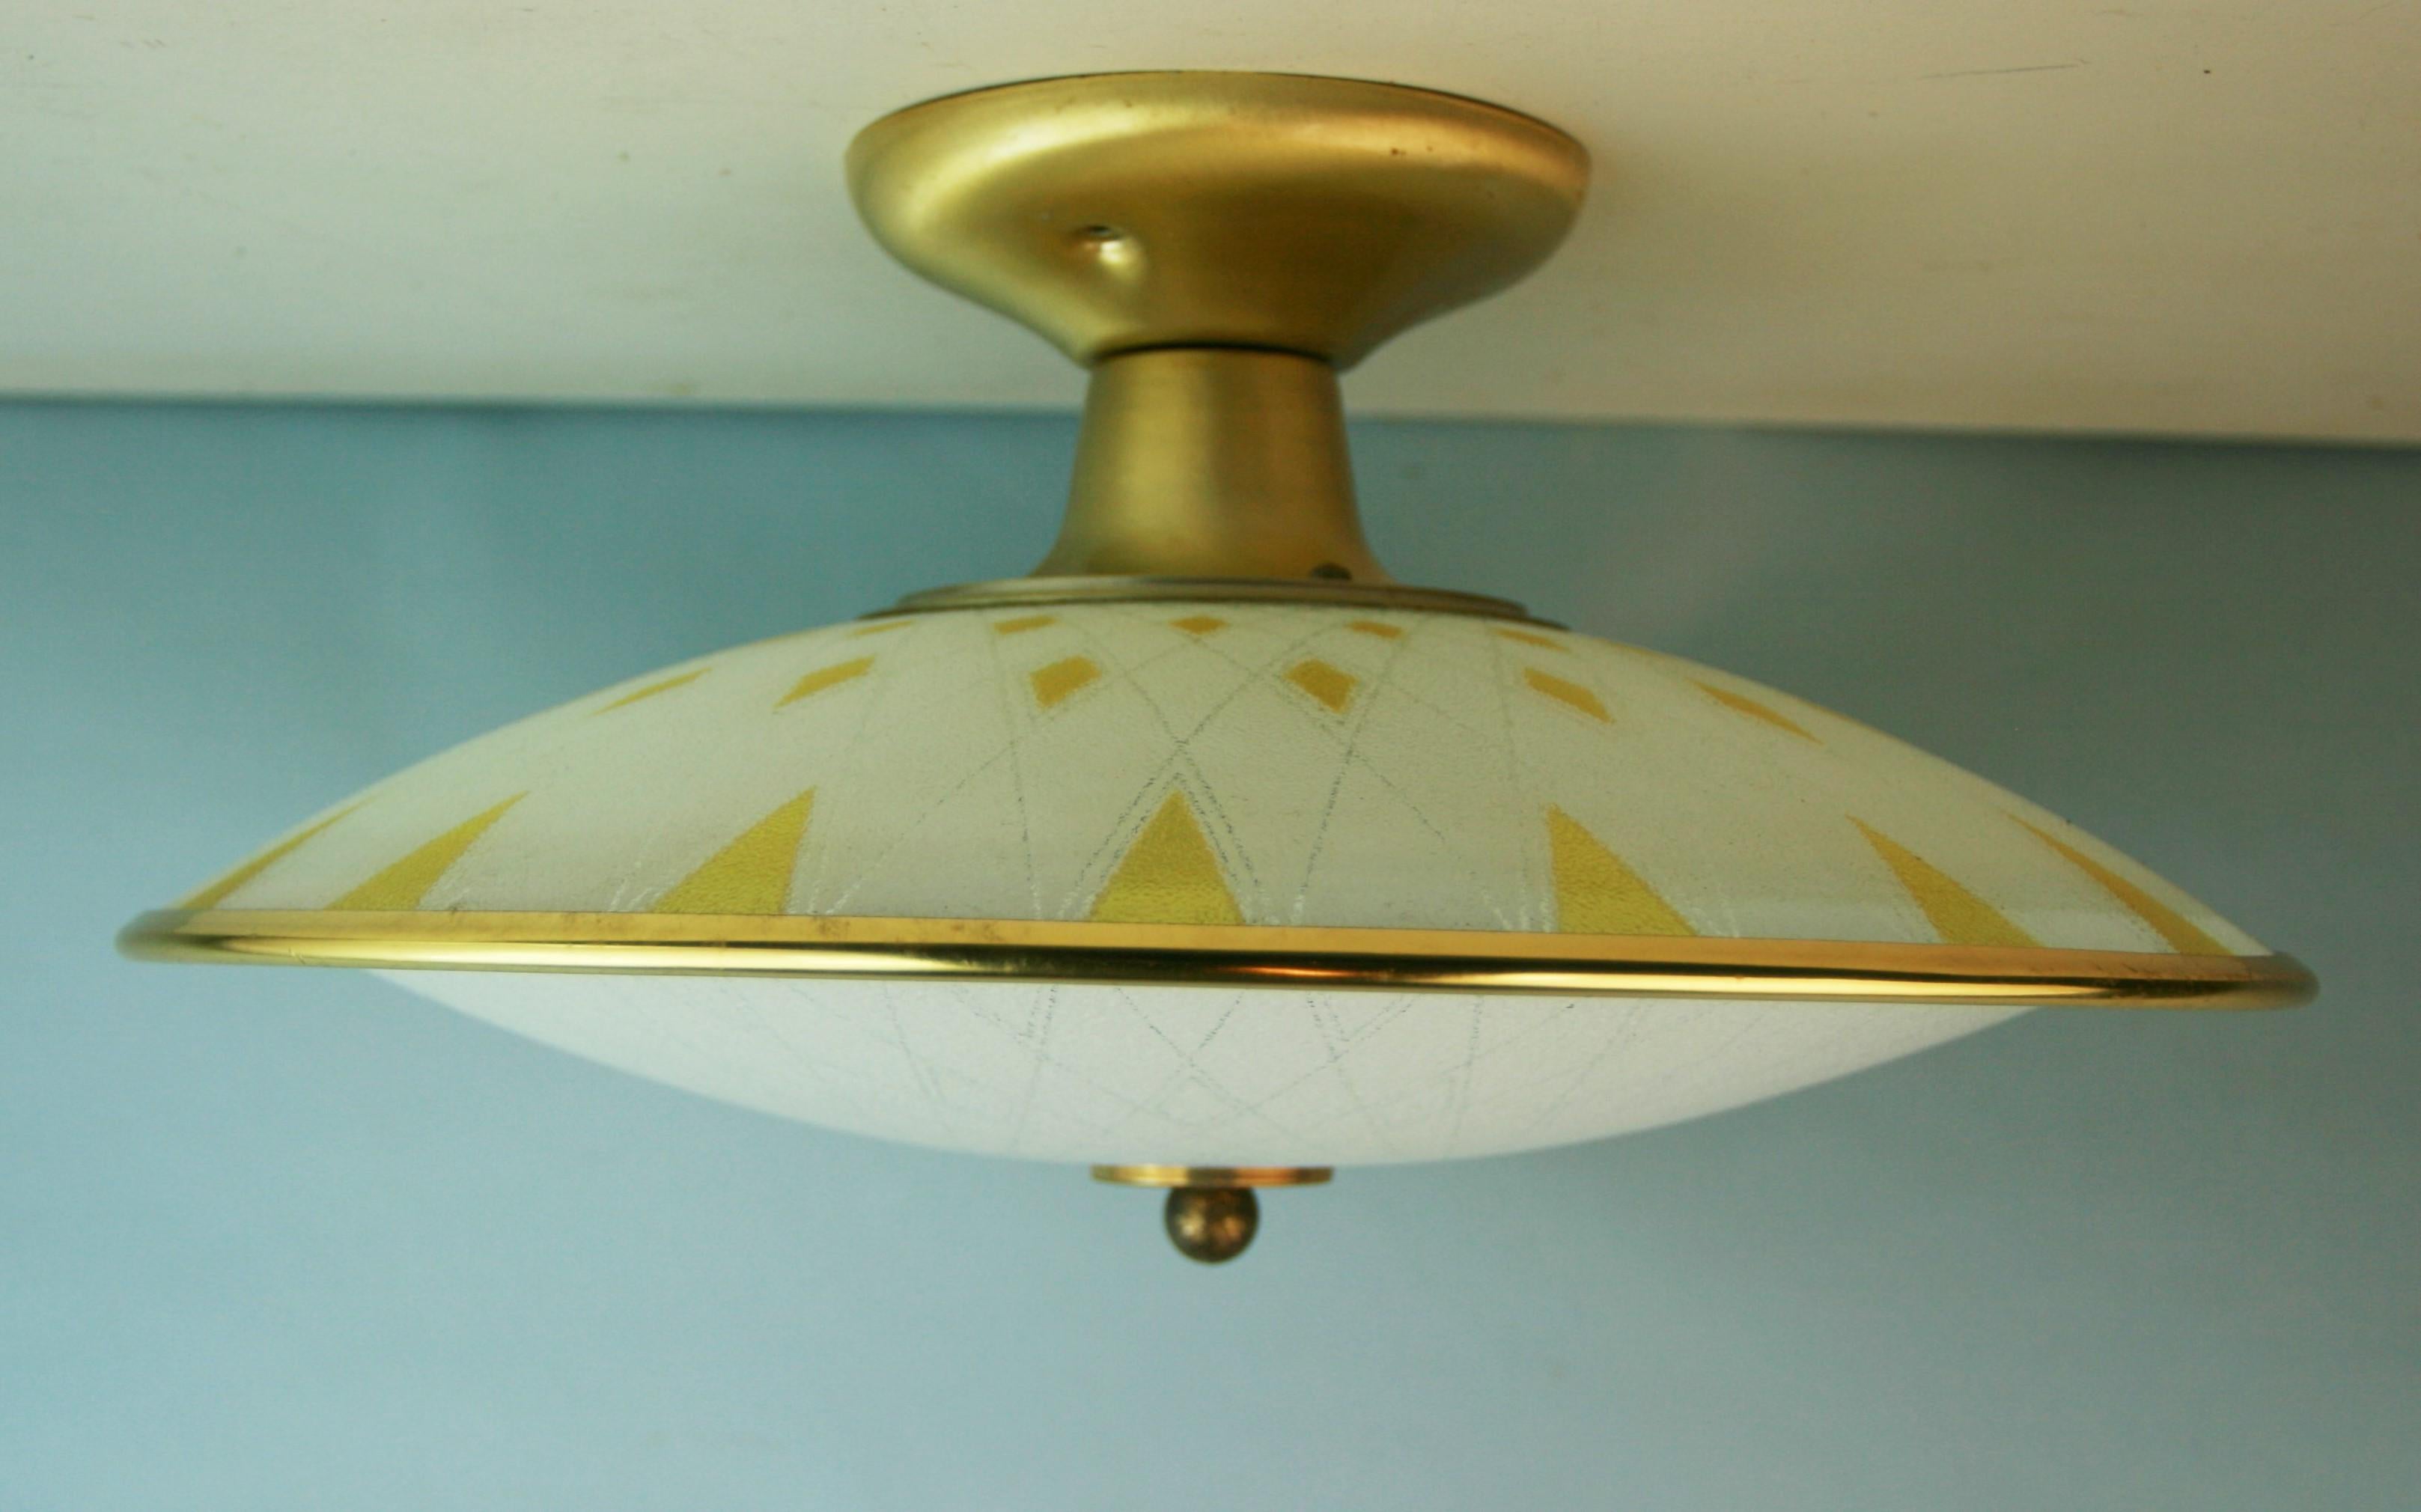 Geometric art glass flush mount 1950'e
Takes 3 40 watt max Edison bulbs
Rewired.